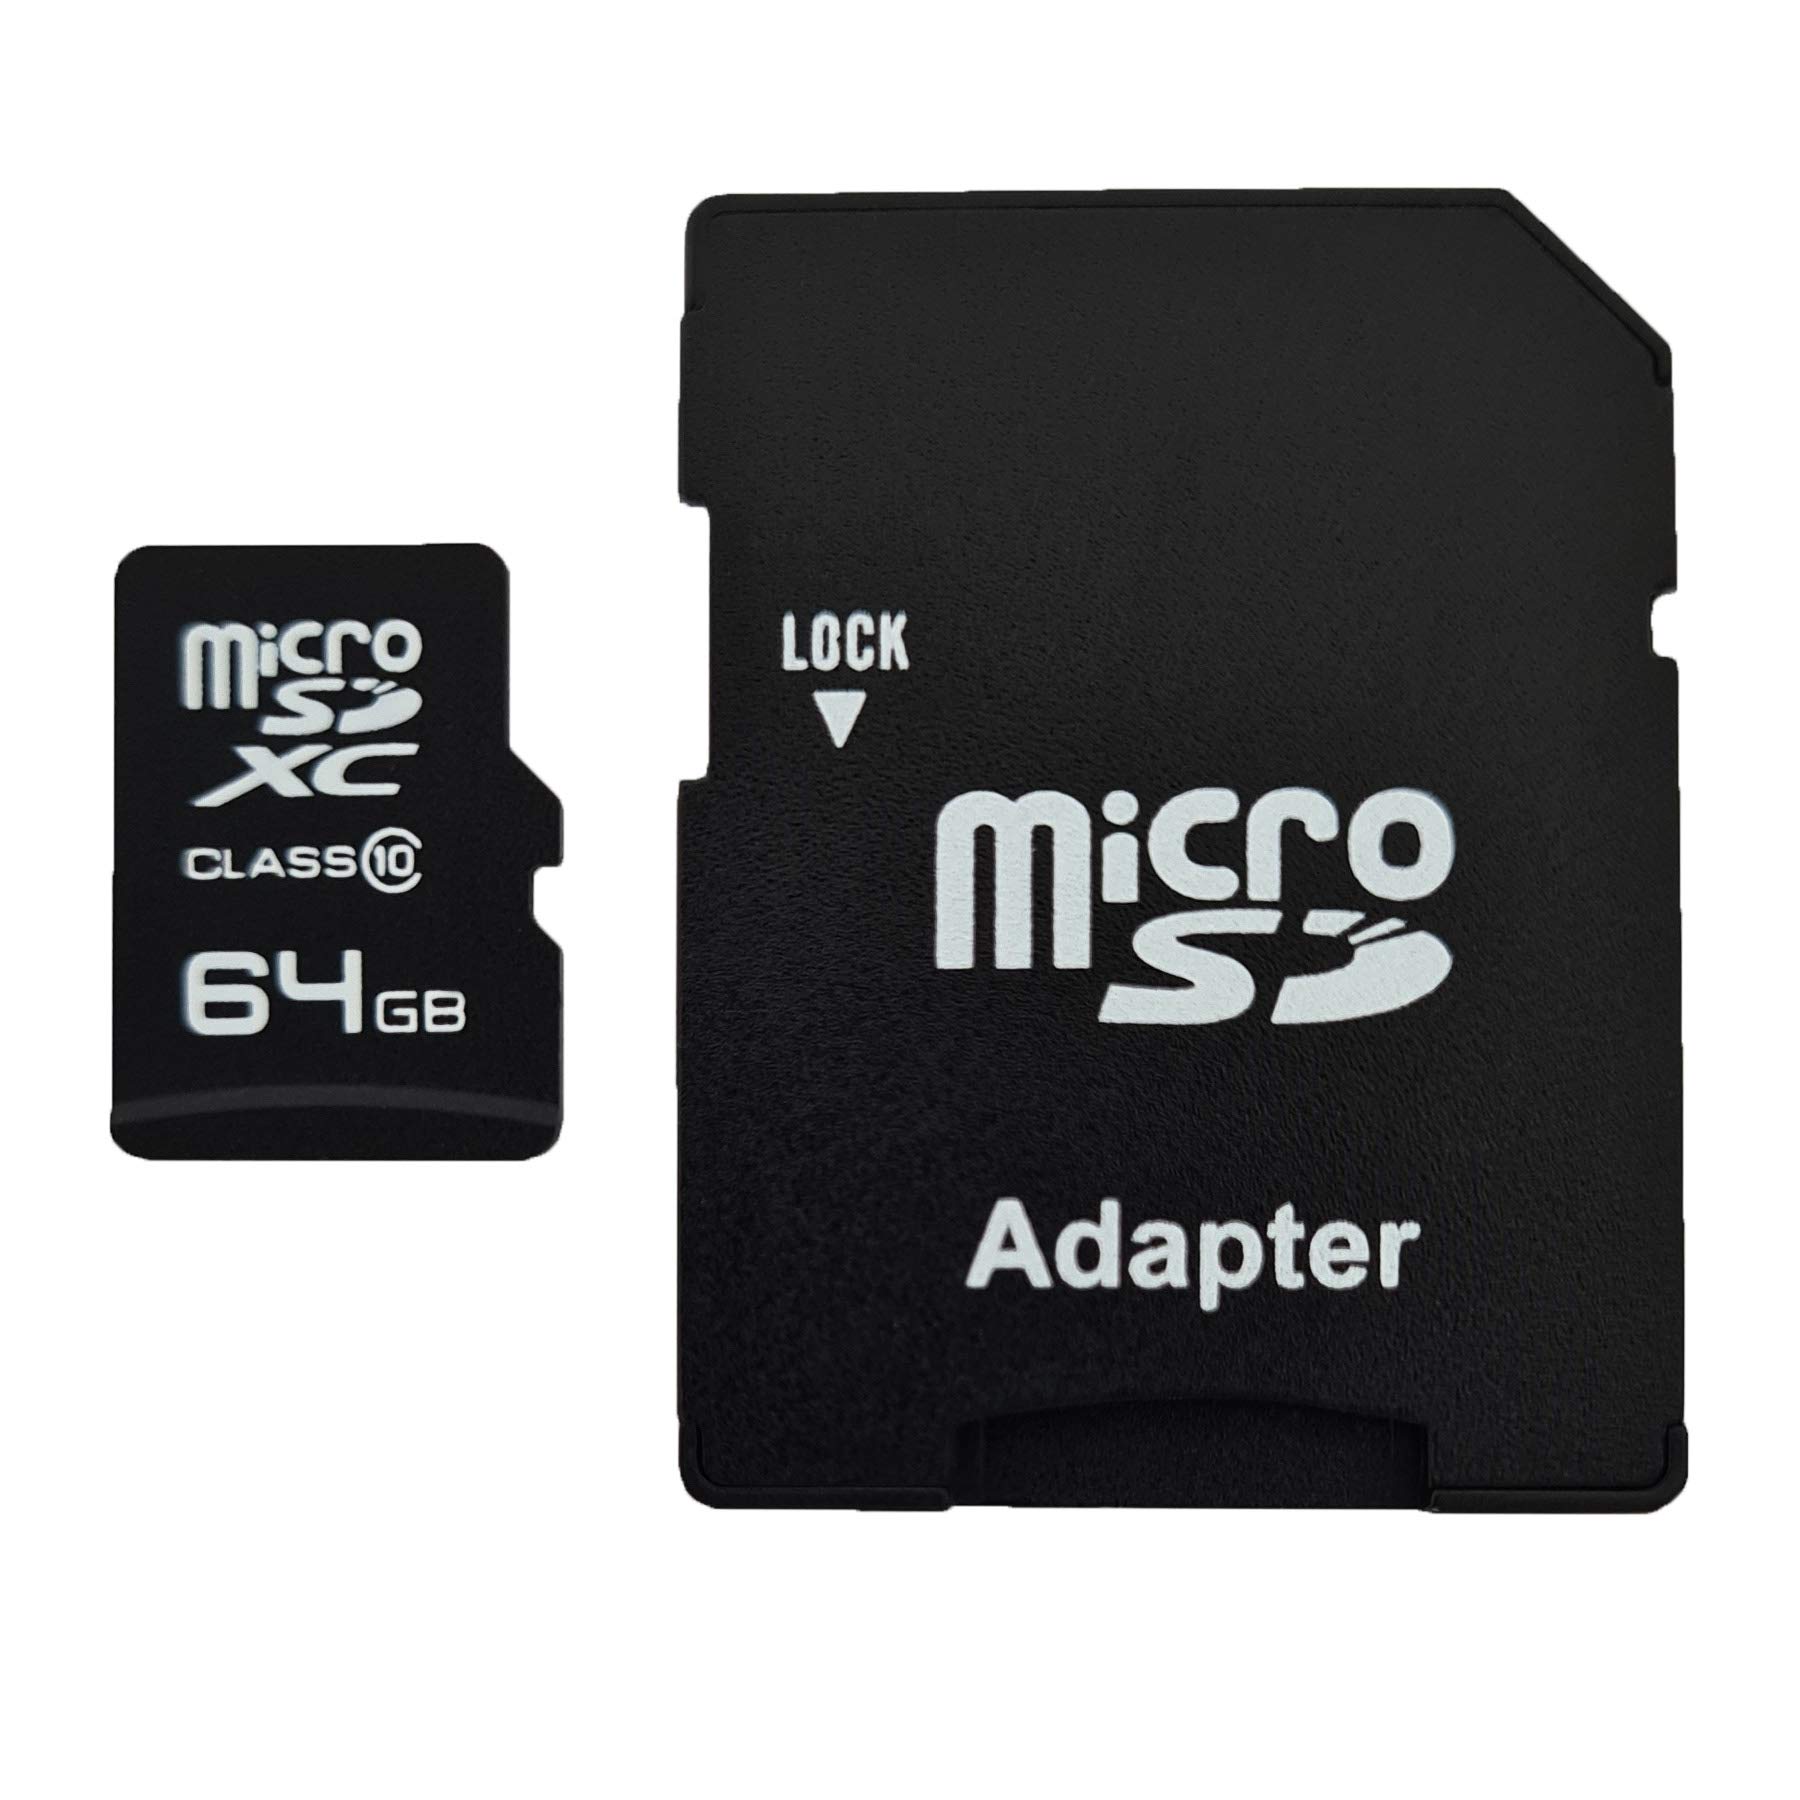 dekoelektropunktde 64GB MicroSDXC Speicherkarte mit Adapter Class 10 kompatibel für Sony Xperia miro